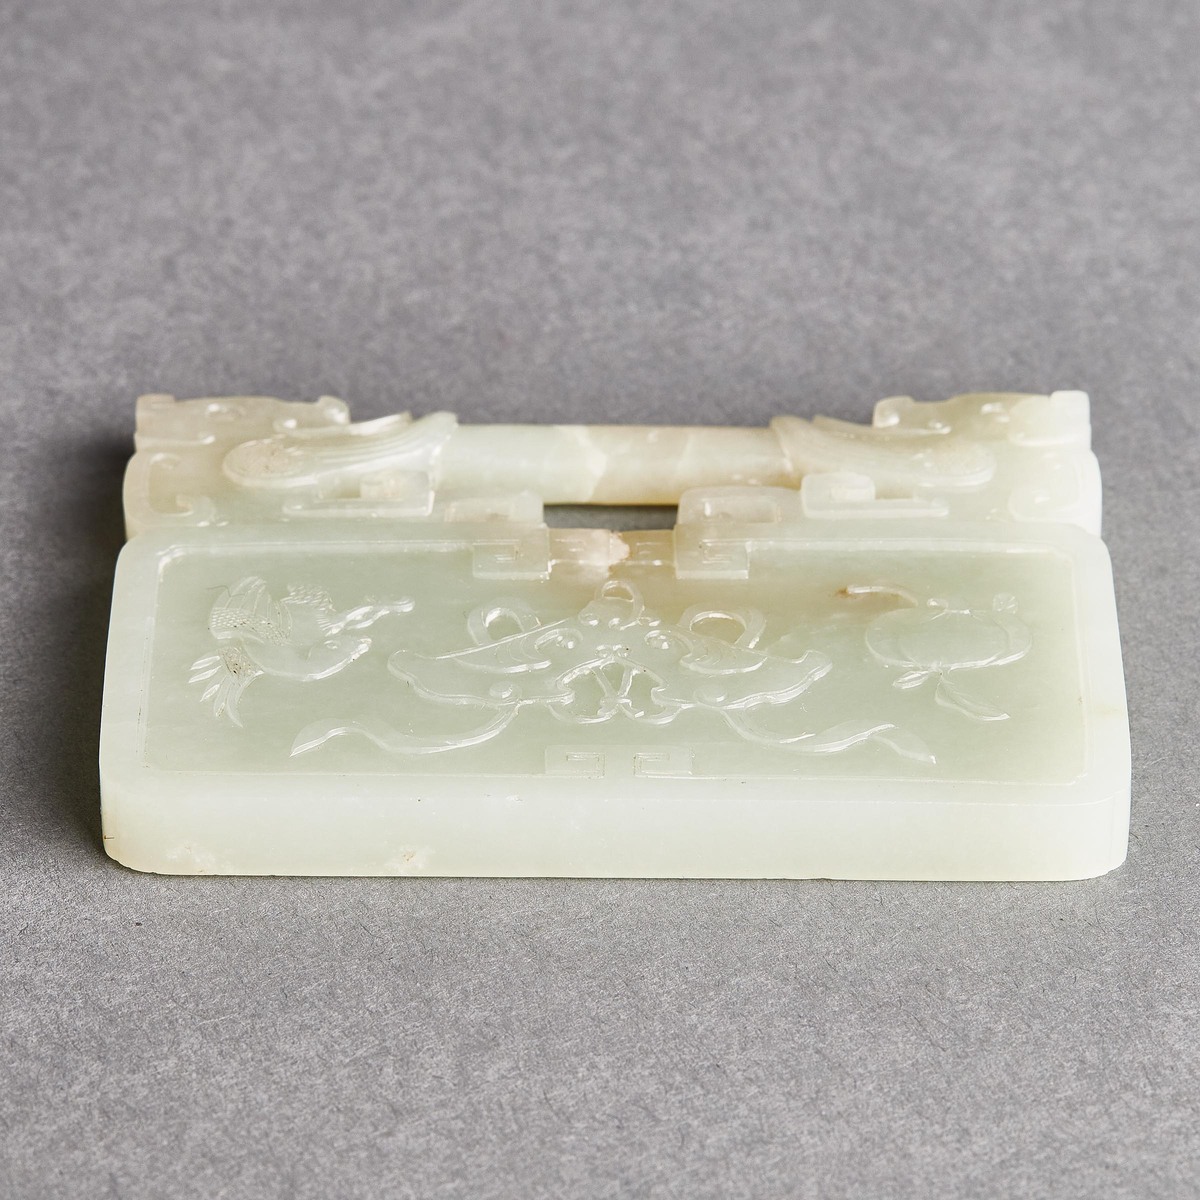 A Pale Celadon Jade Lock-Form 'Yong Bao Chang Chun' Plaque, 19th Century, 清 十九世纪 青白玉雕'永保长春'锁形牌桌屏, 玉牌 - Image 8 of 10